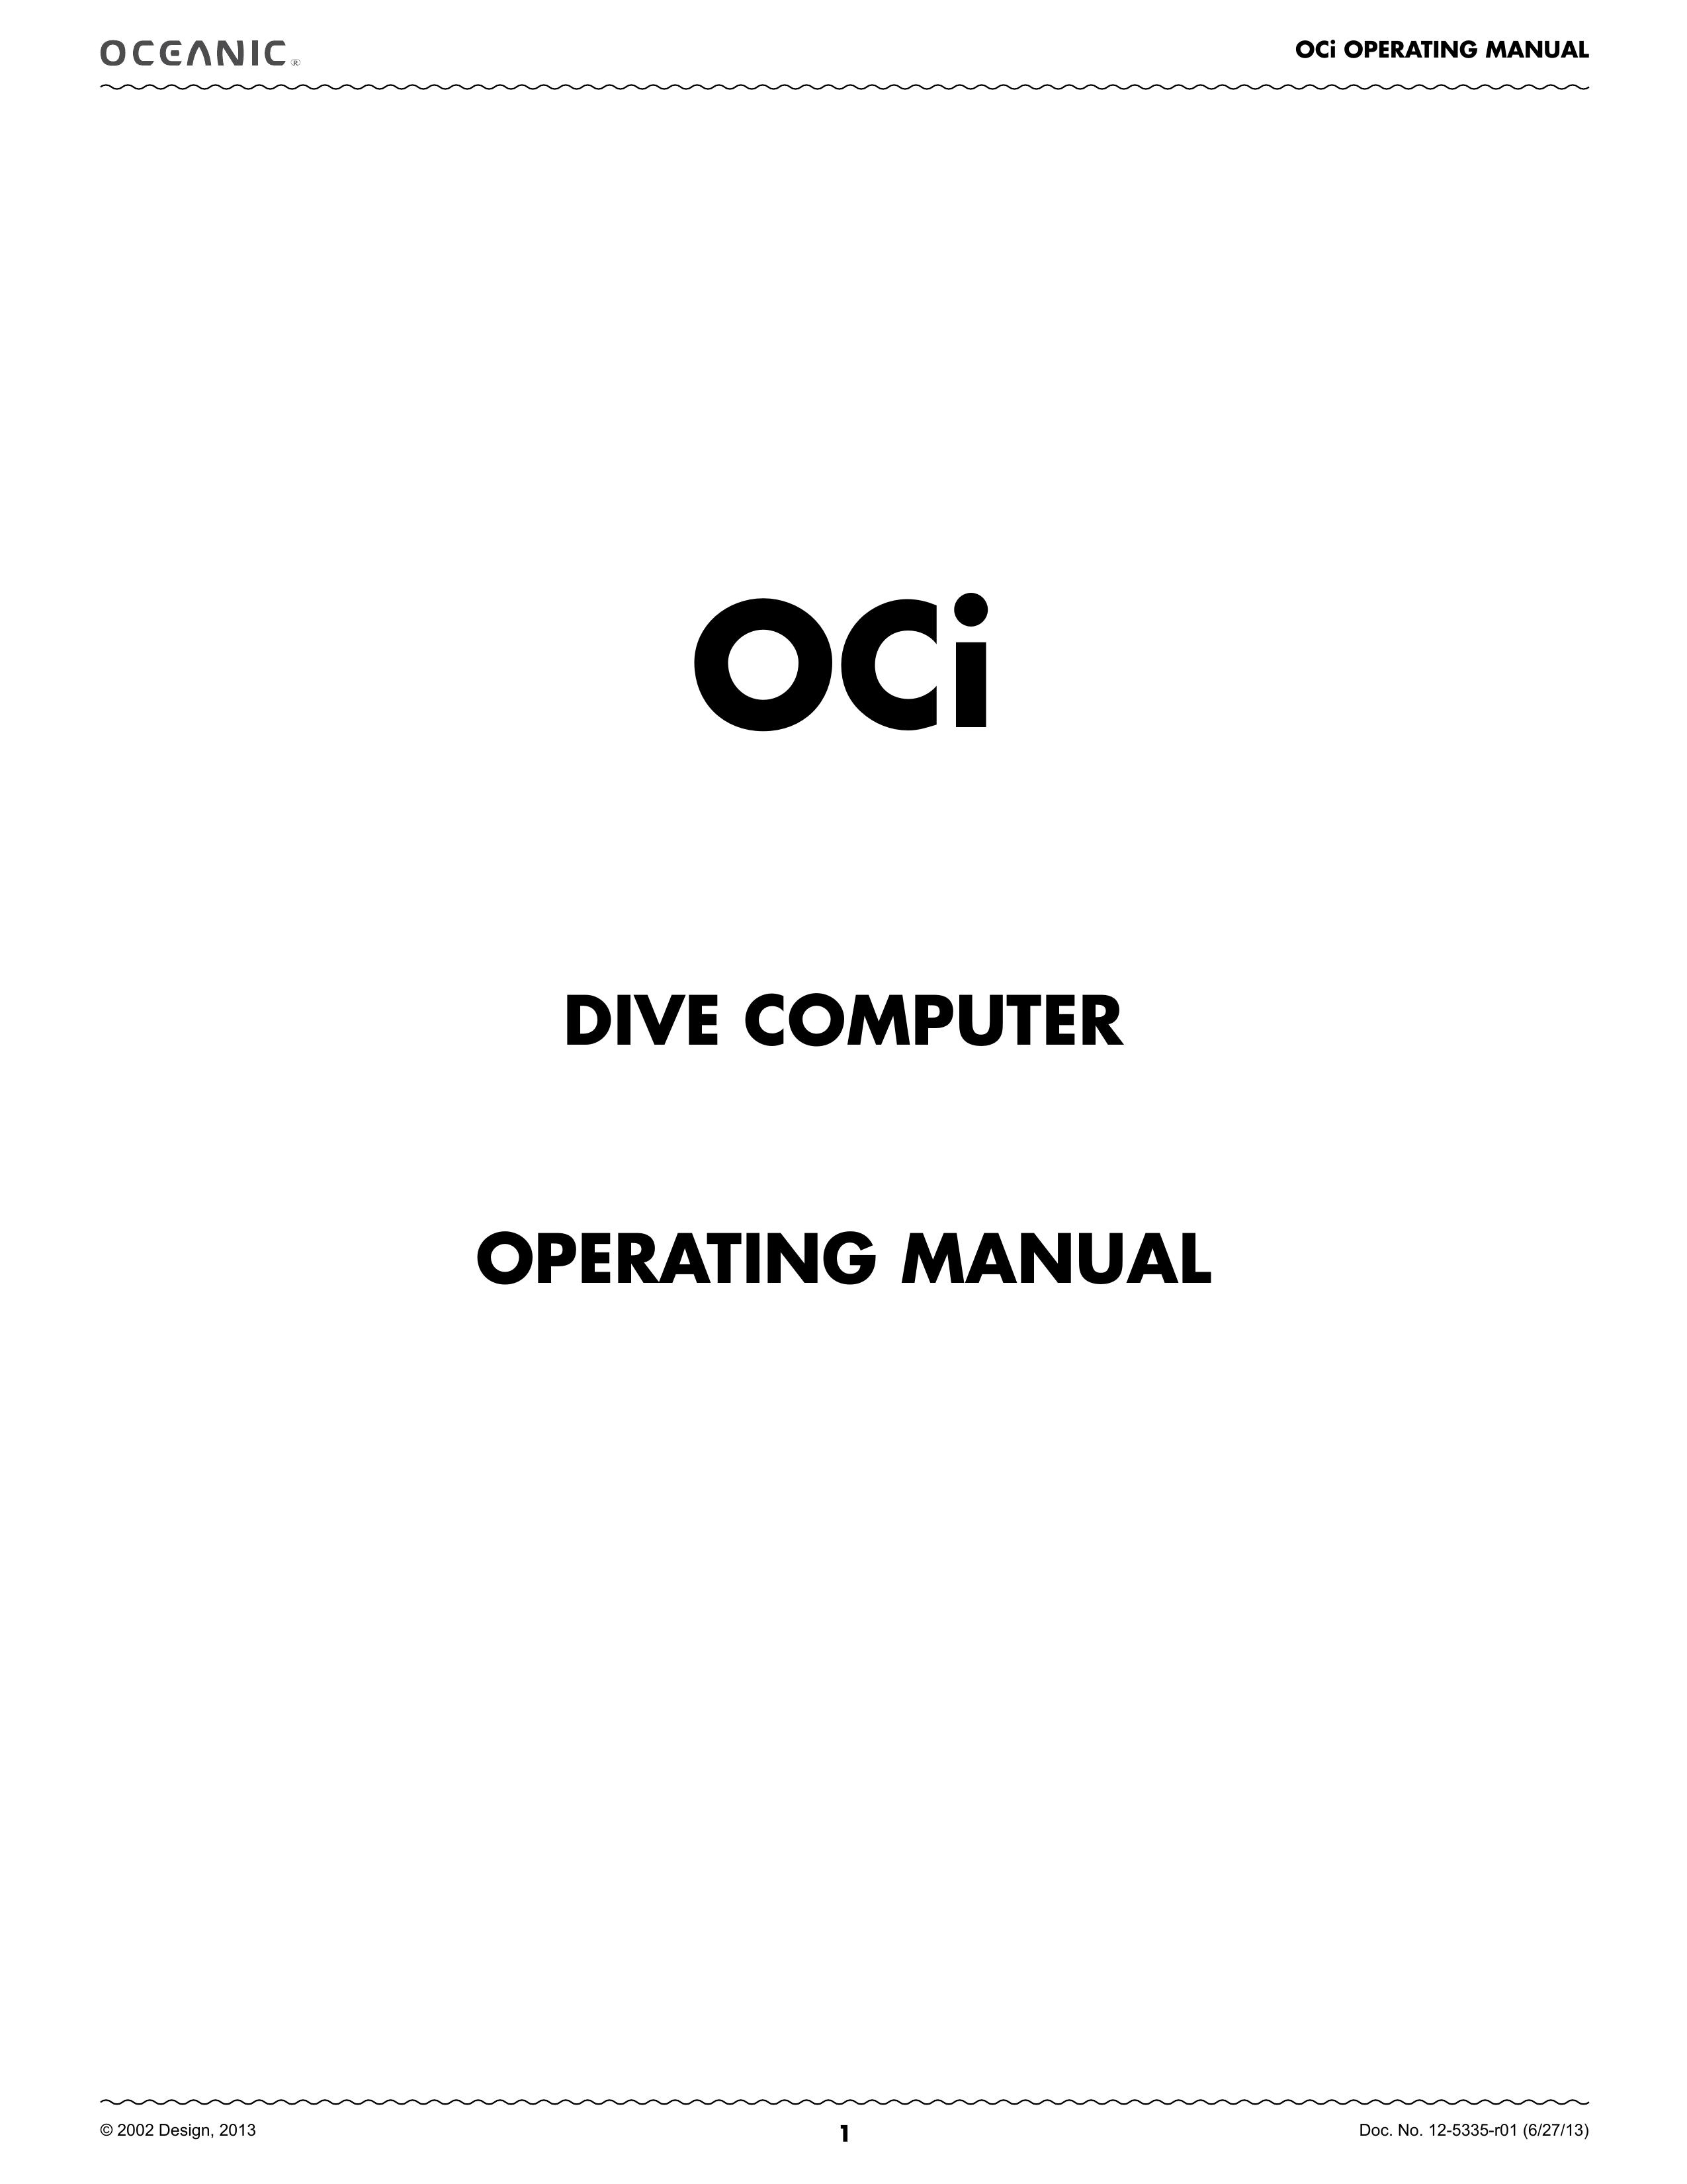 Oceanic 04-8792-79 Scuba Diving Equipment User Manual